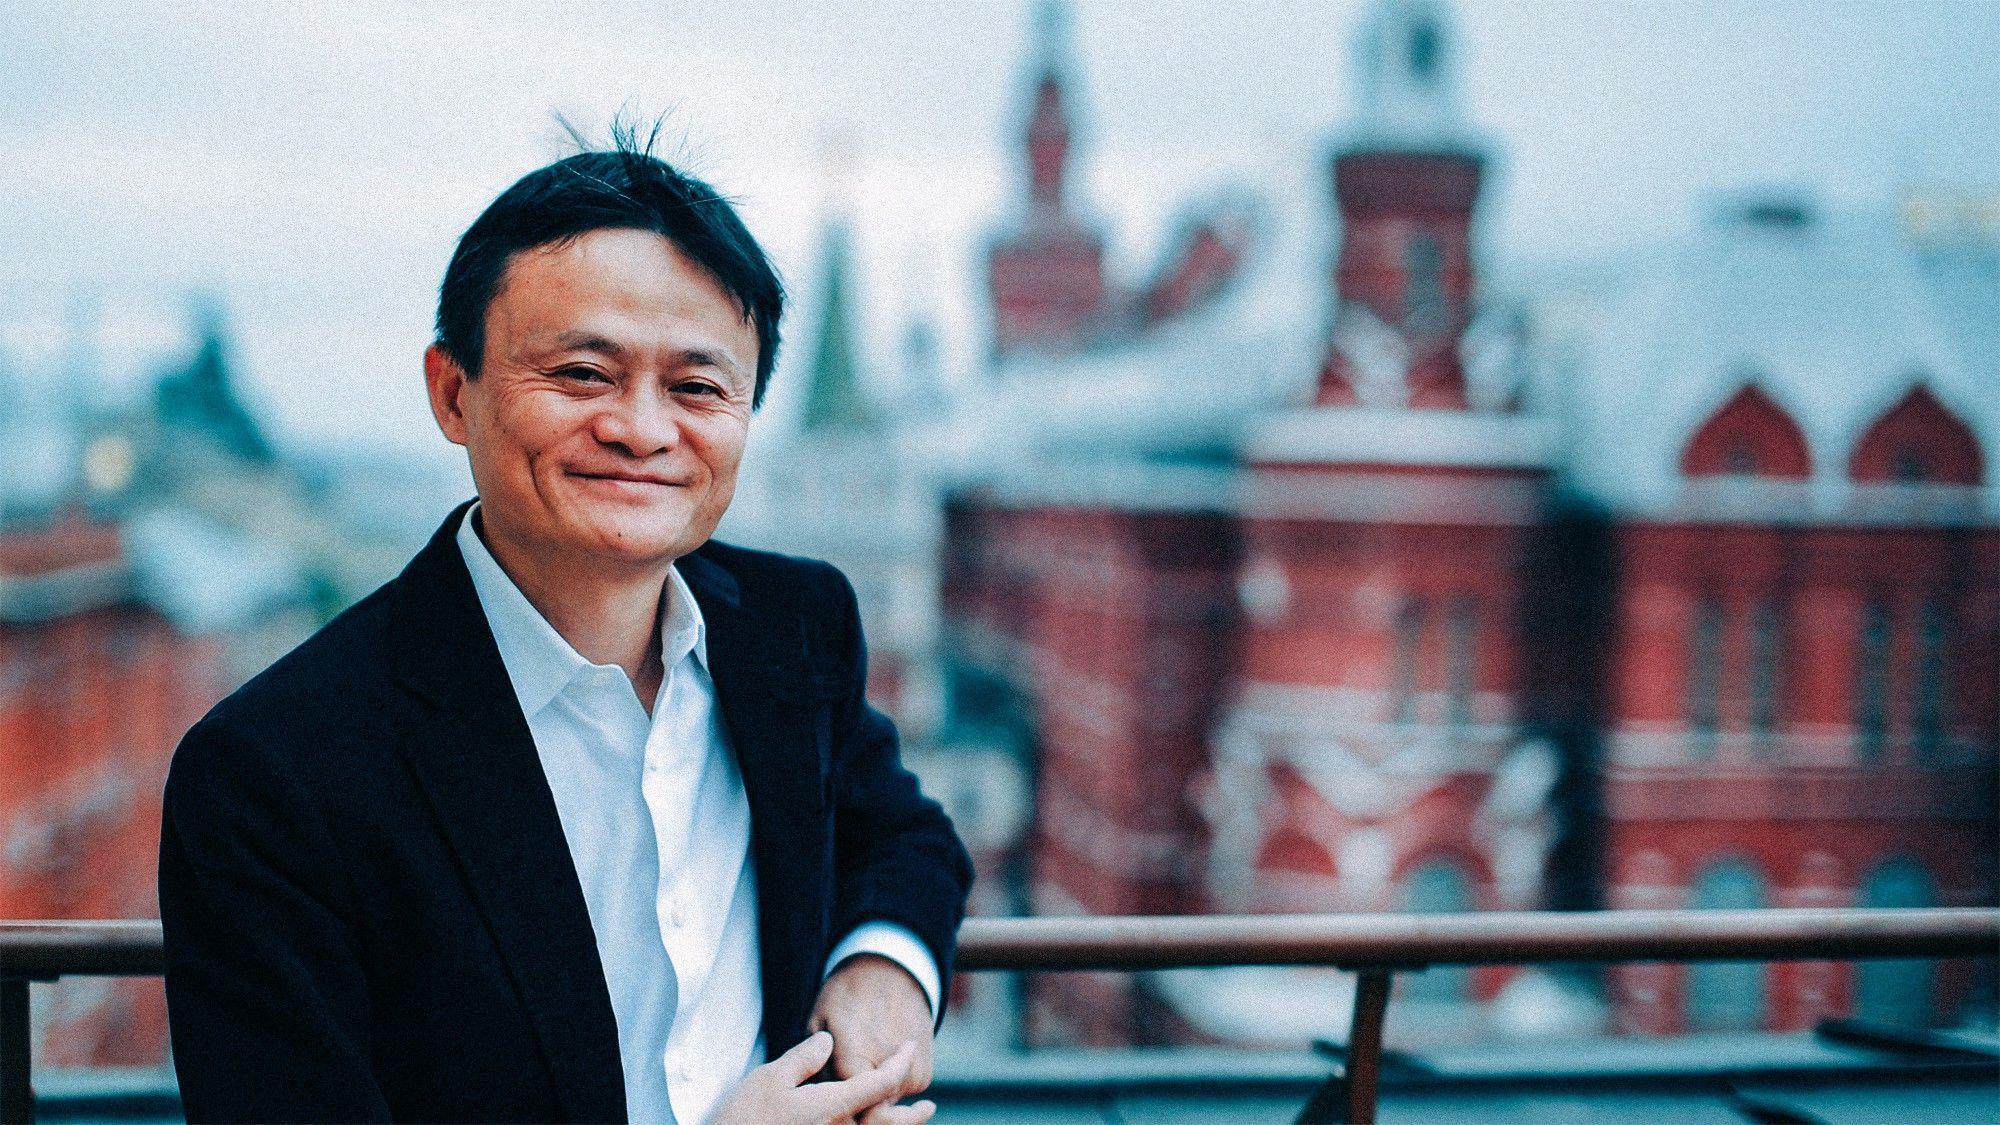 Jack Ma Wallpapers Top Free Jack Ma Backgrounds 